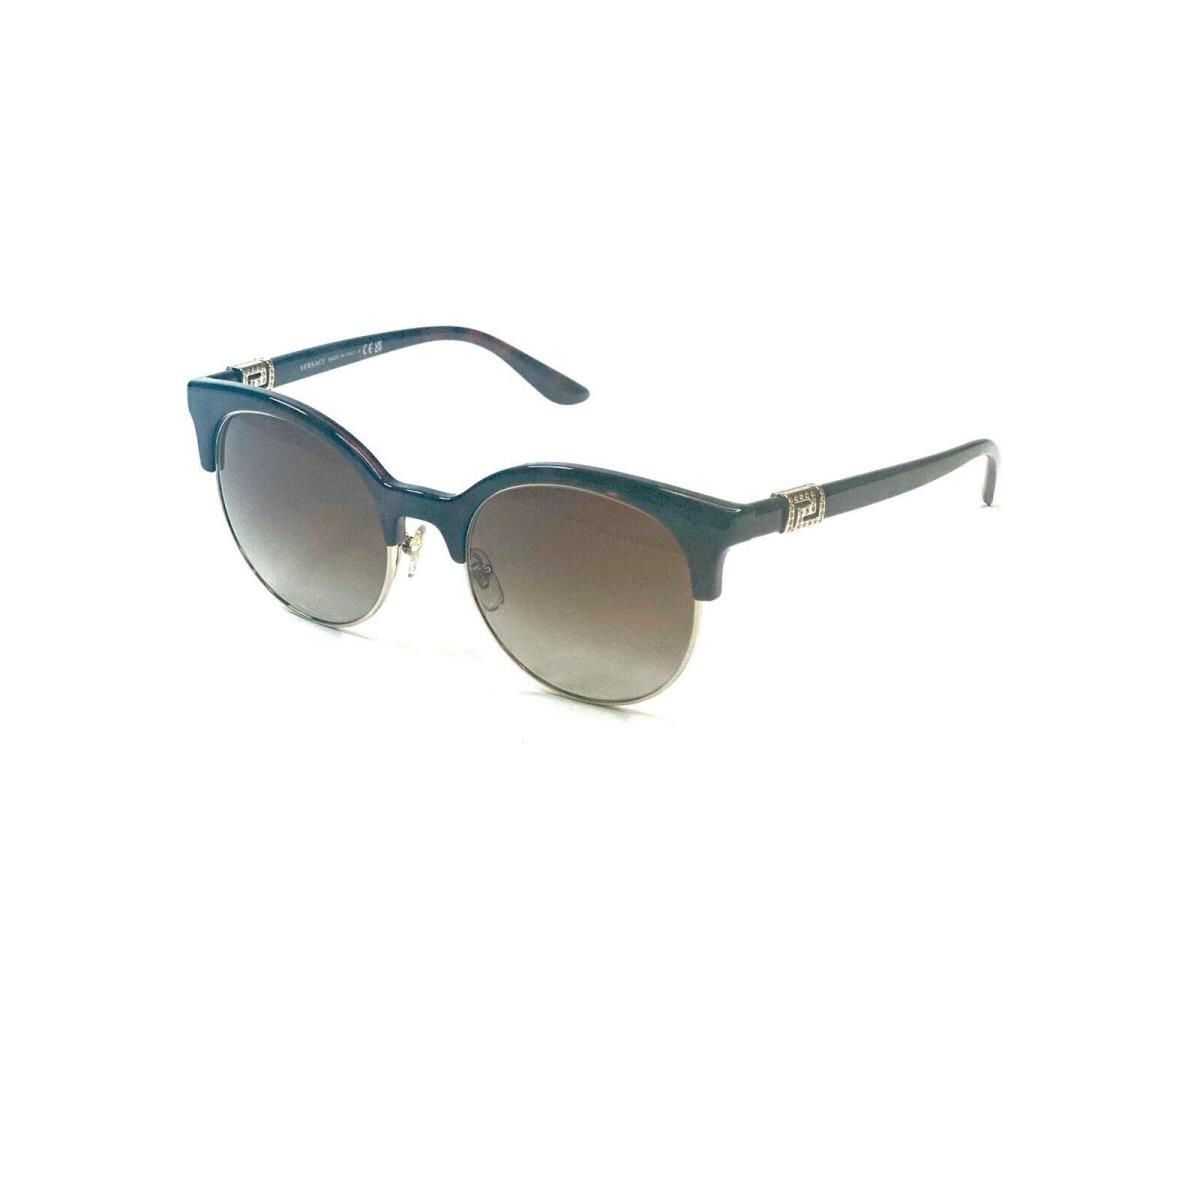 Versace Sunglasses Mod 4326B 5212/13 Havana Pale Gold/brown Gradient 53 mm